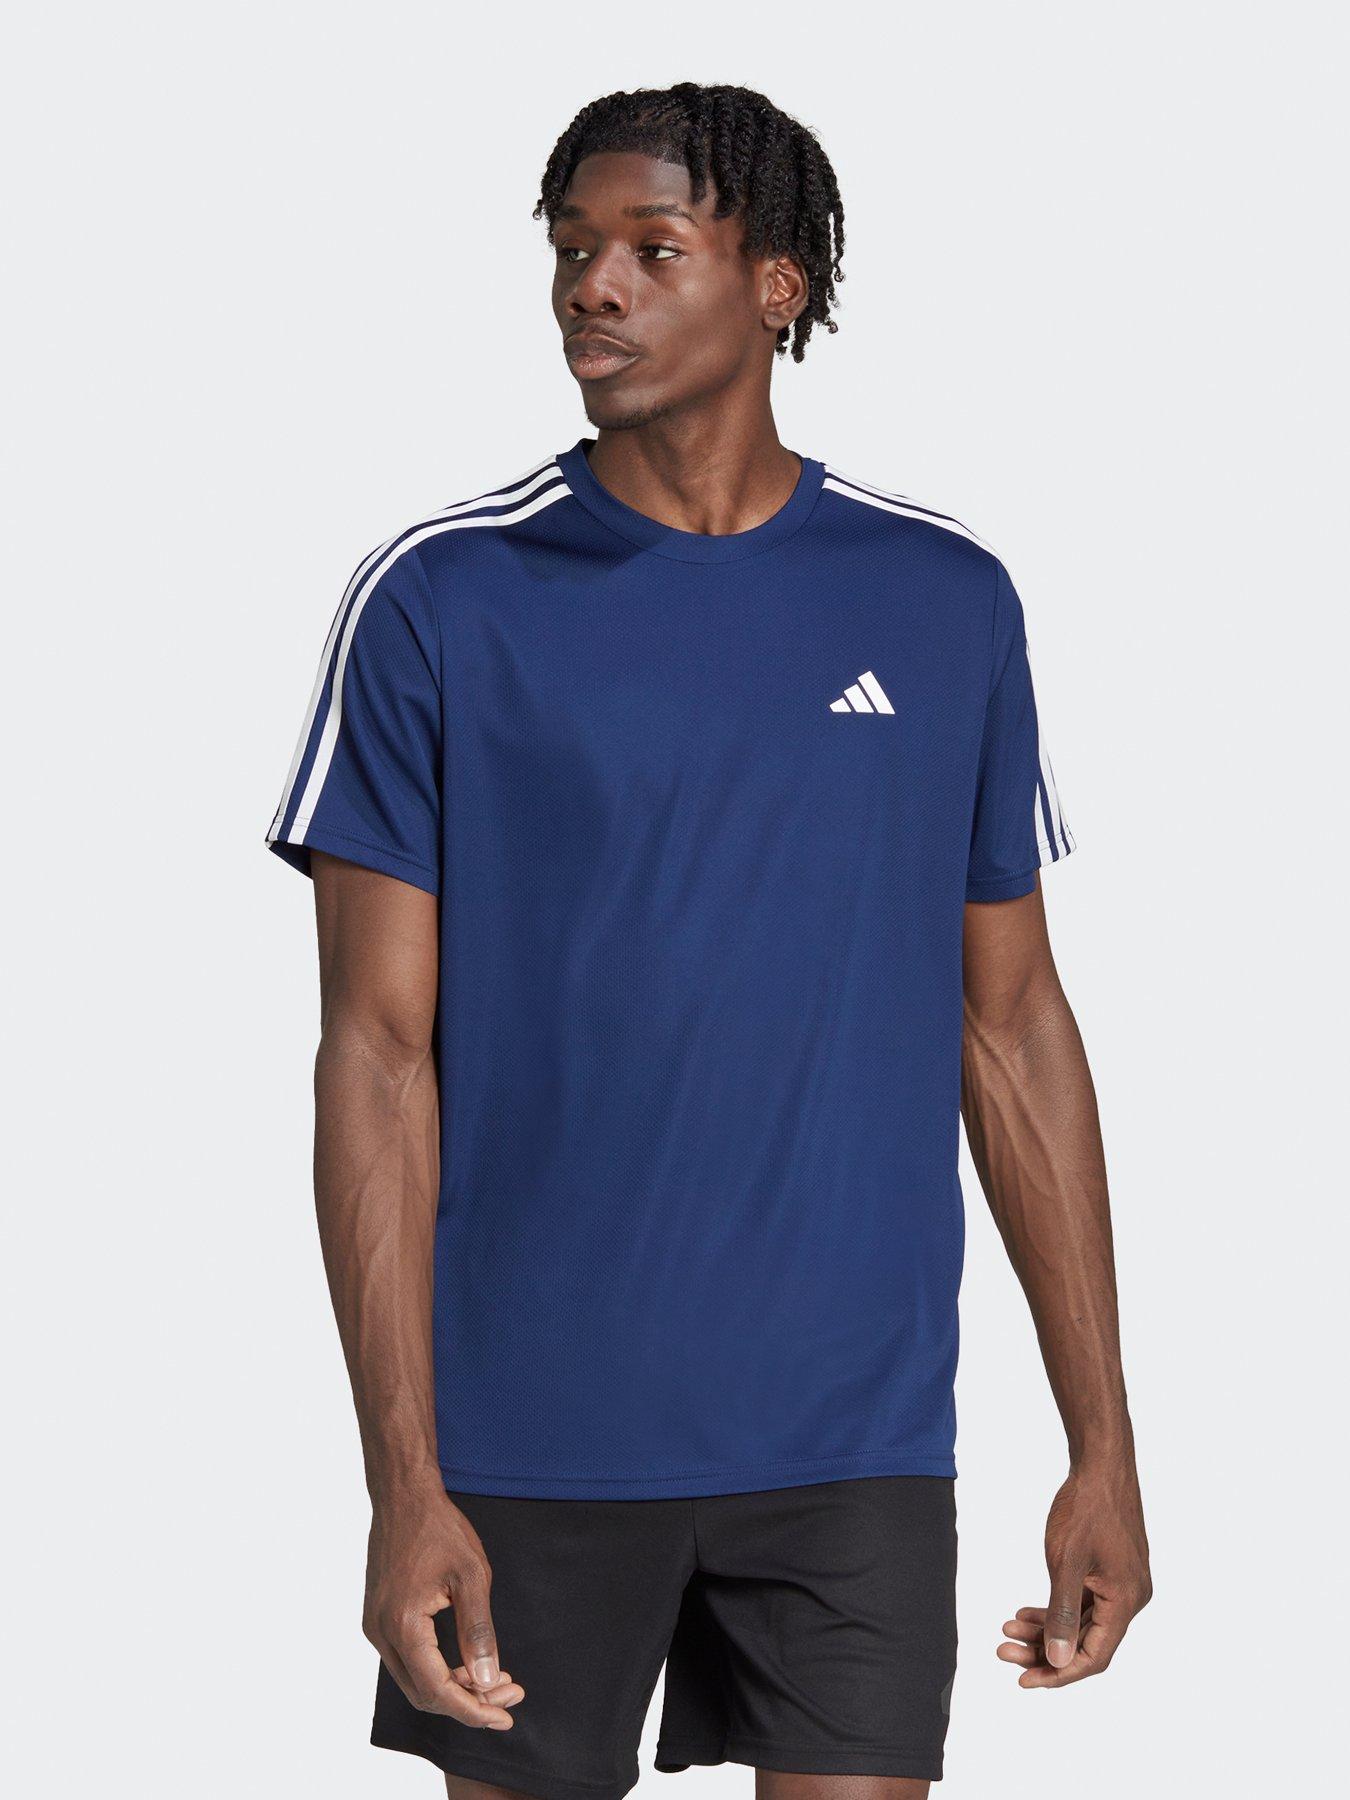 Accord Følg os spole 3XL | Adidas | T-shirts & polos | Sportswear | Men | www.very.co.uk